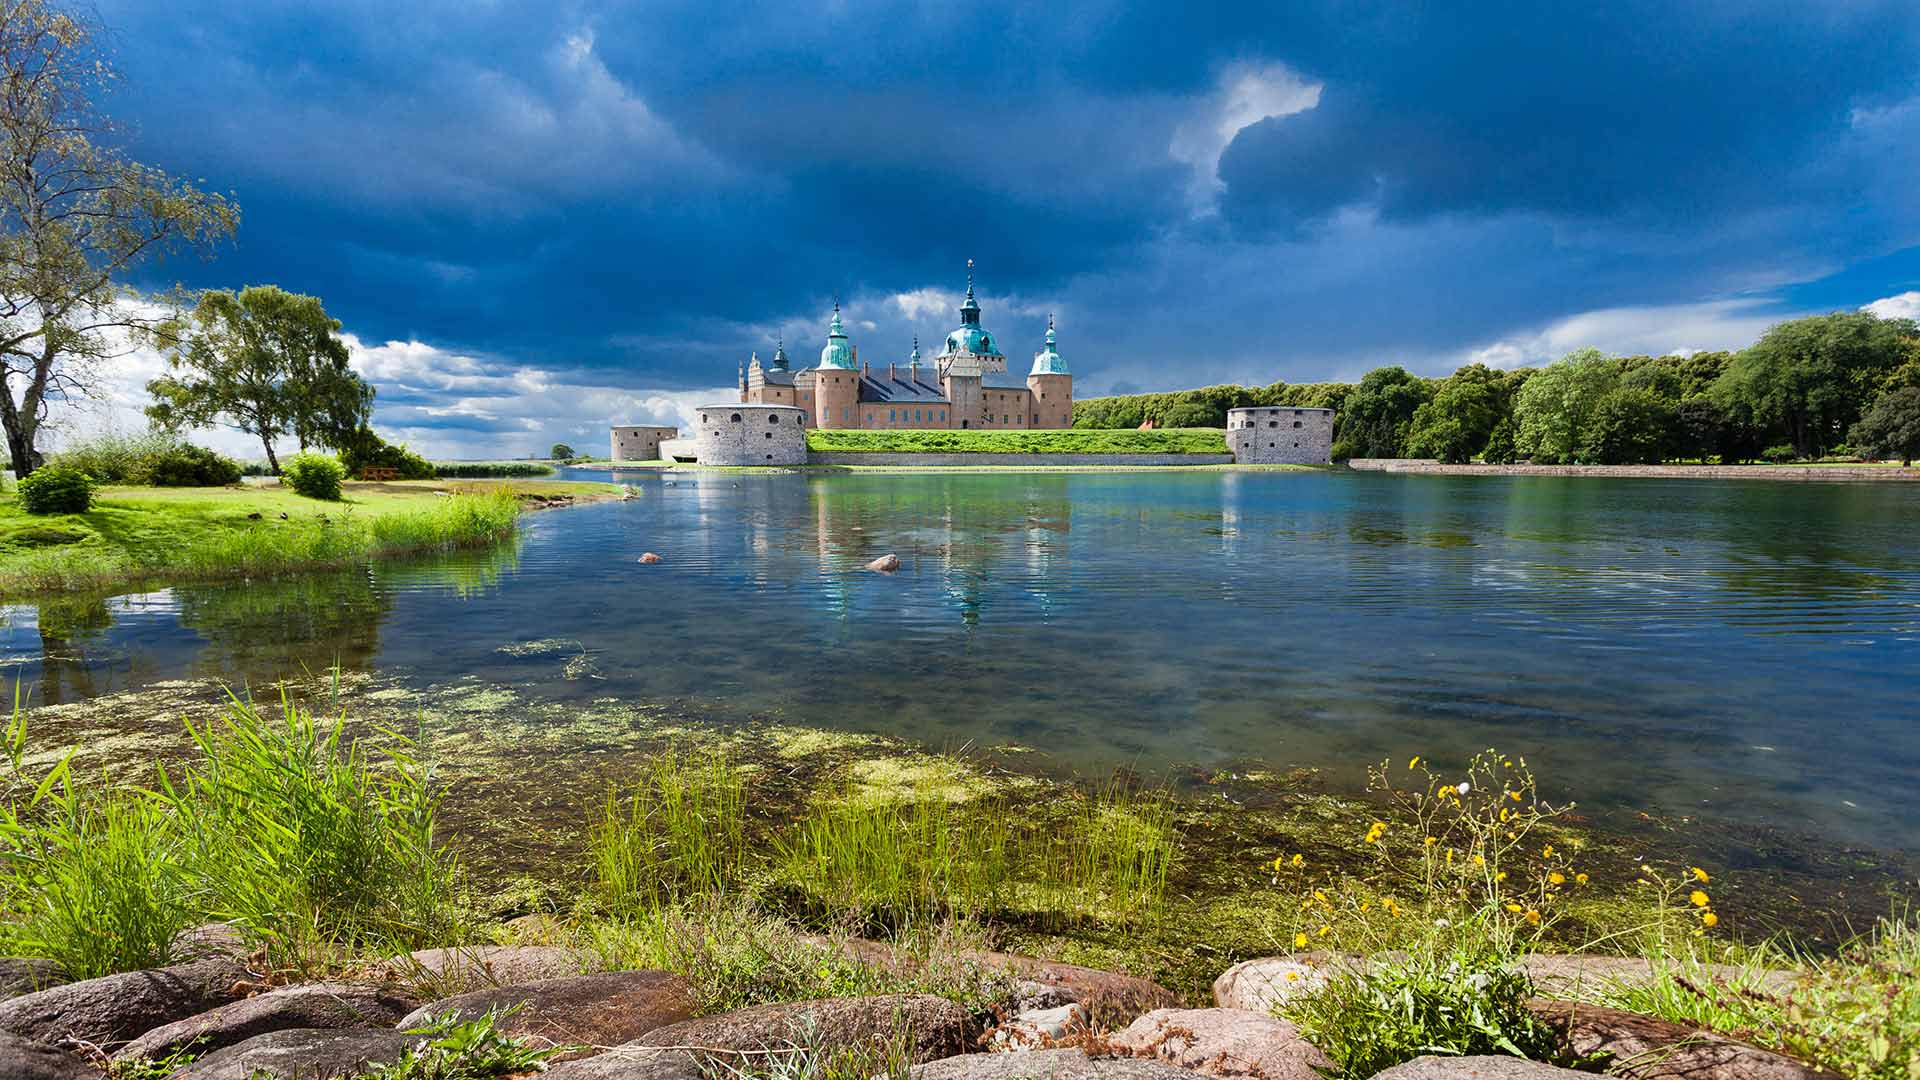 kalmar castle in sweden